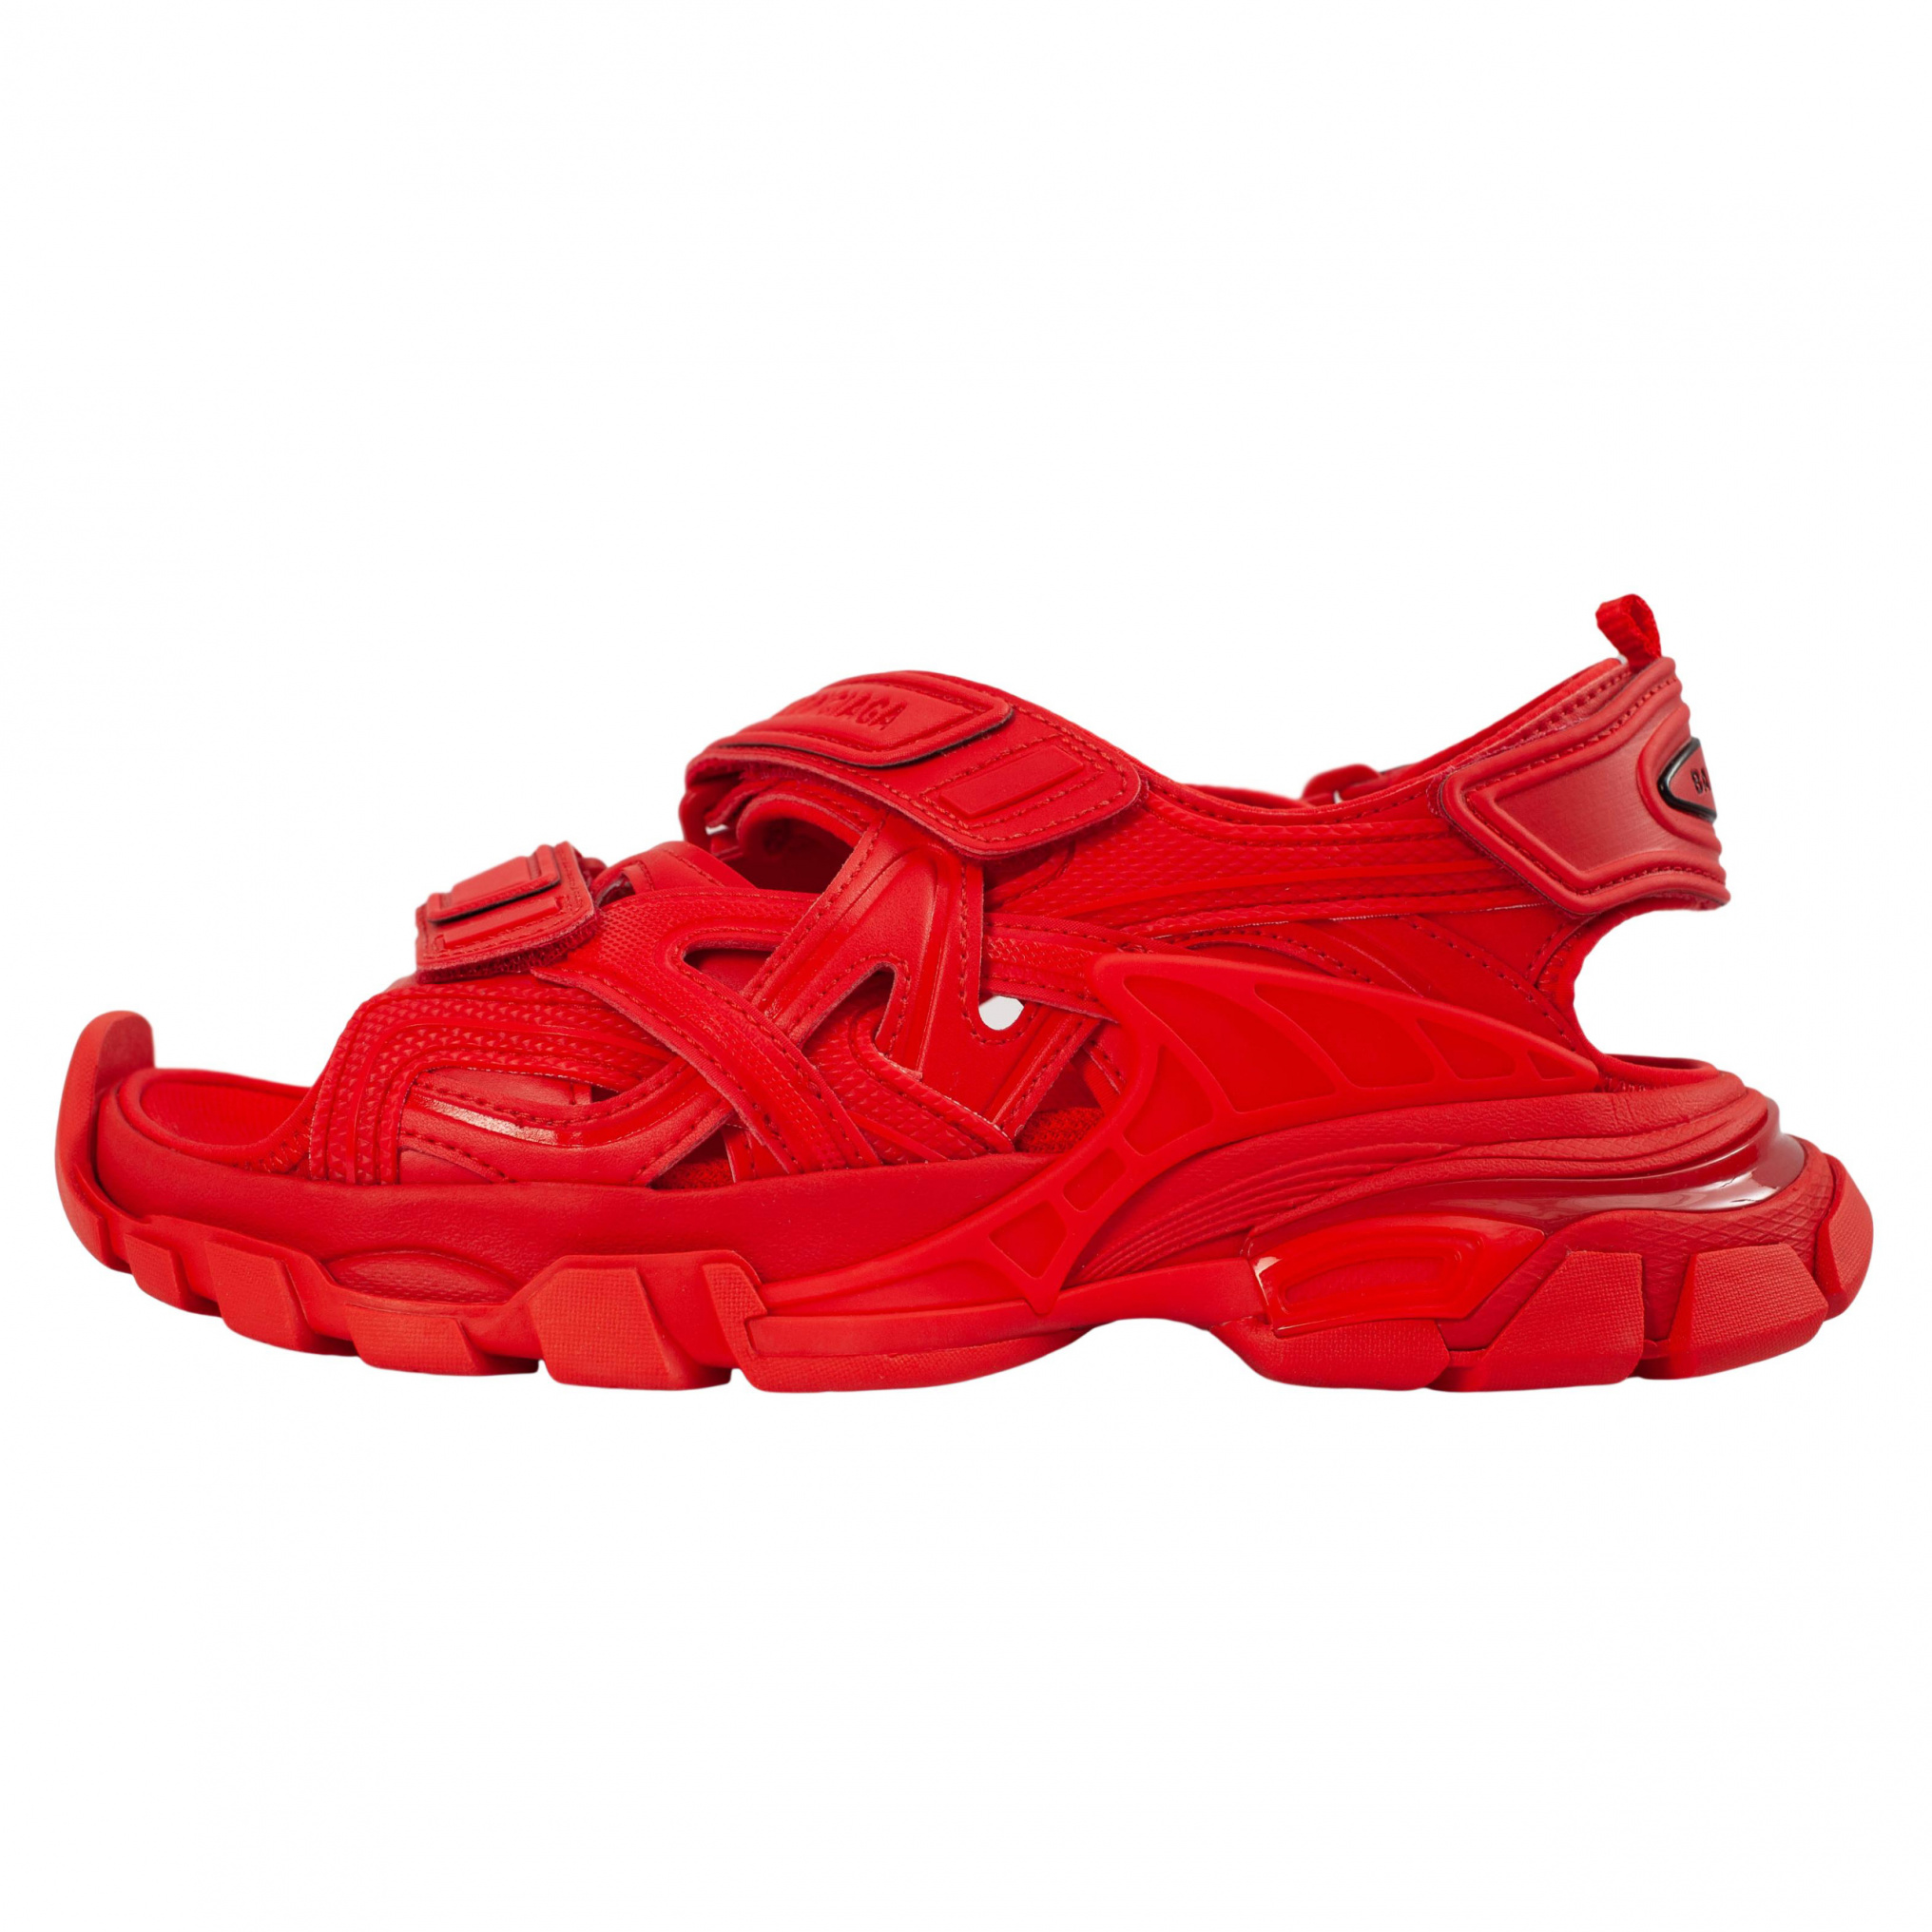 Красные сандалии Track - Balenciaga 617542/W2CC1/6000